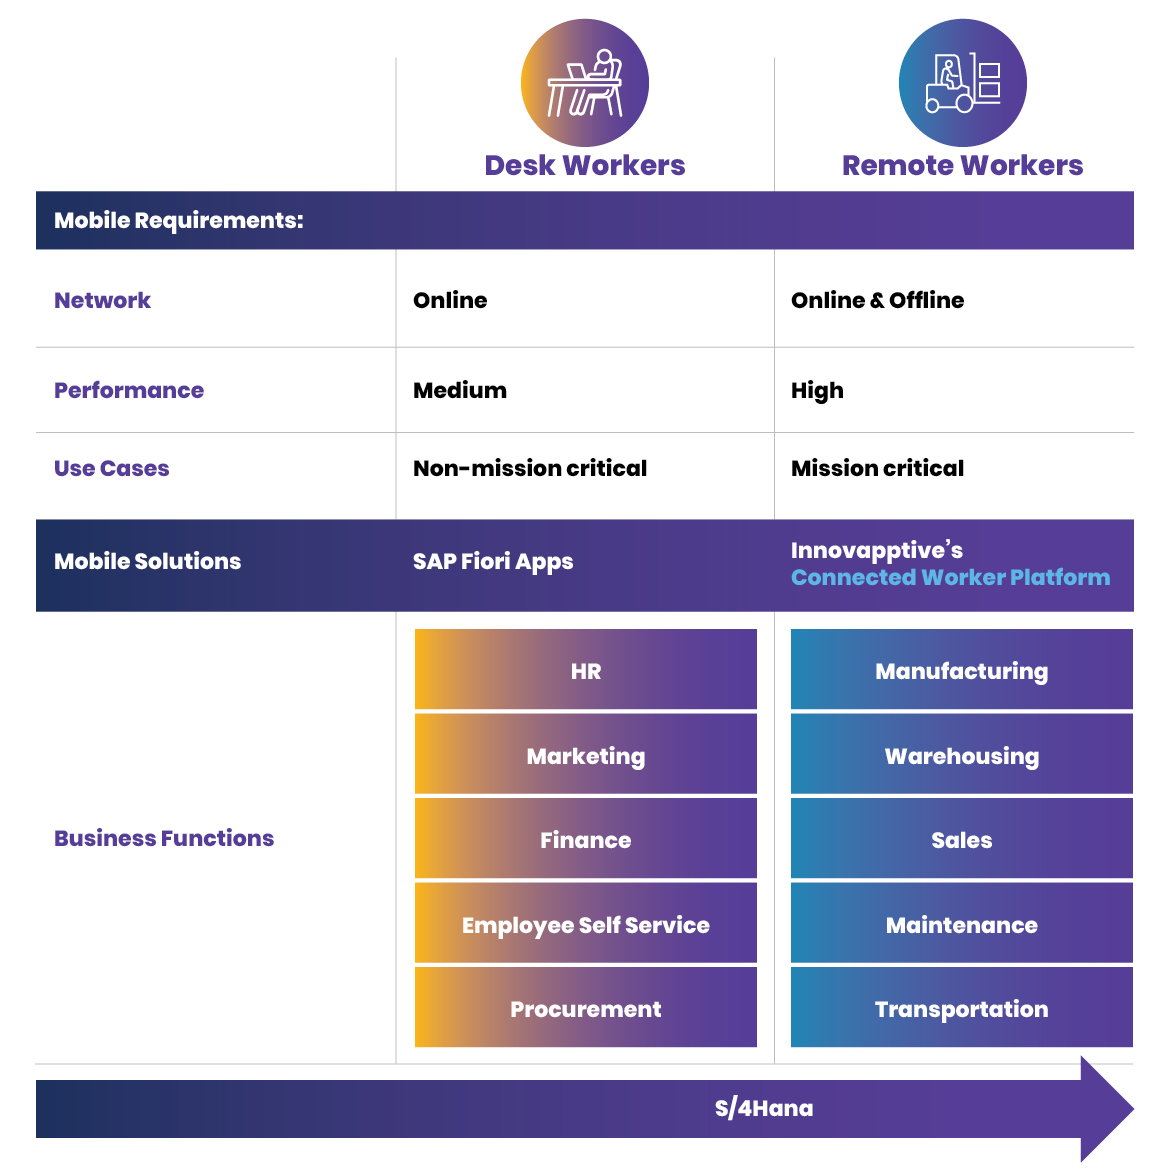 SAP-S4HANA-collaboration-across-the-enterprise-using-a-connected-worker-platform-extended-warehouse-management-ewm